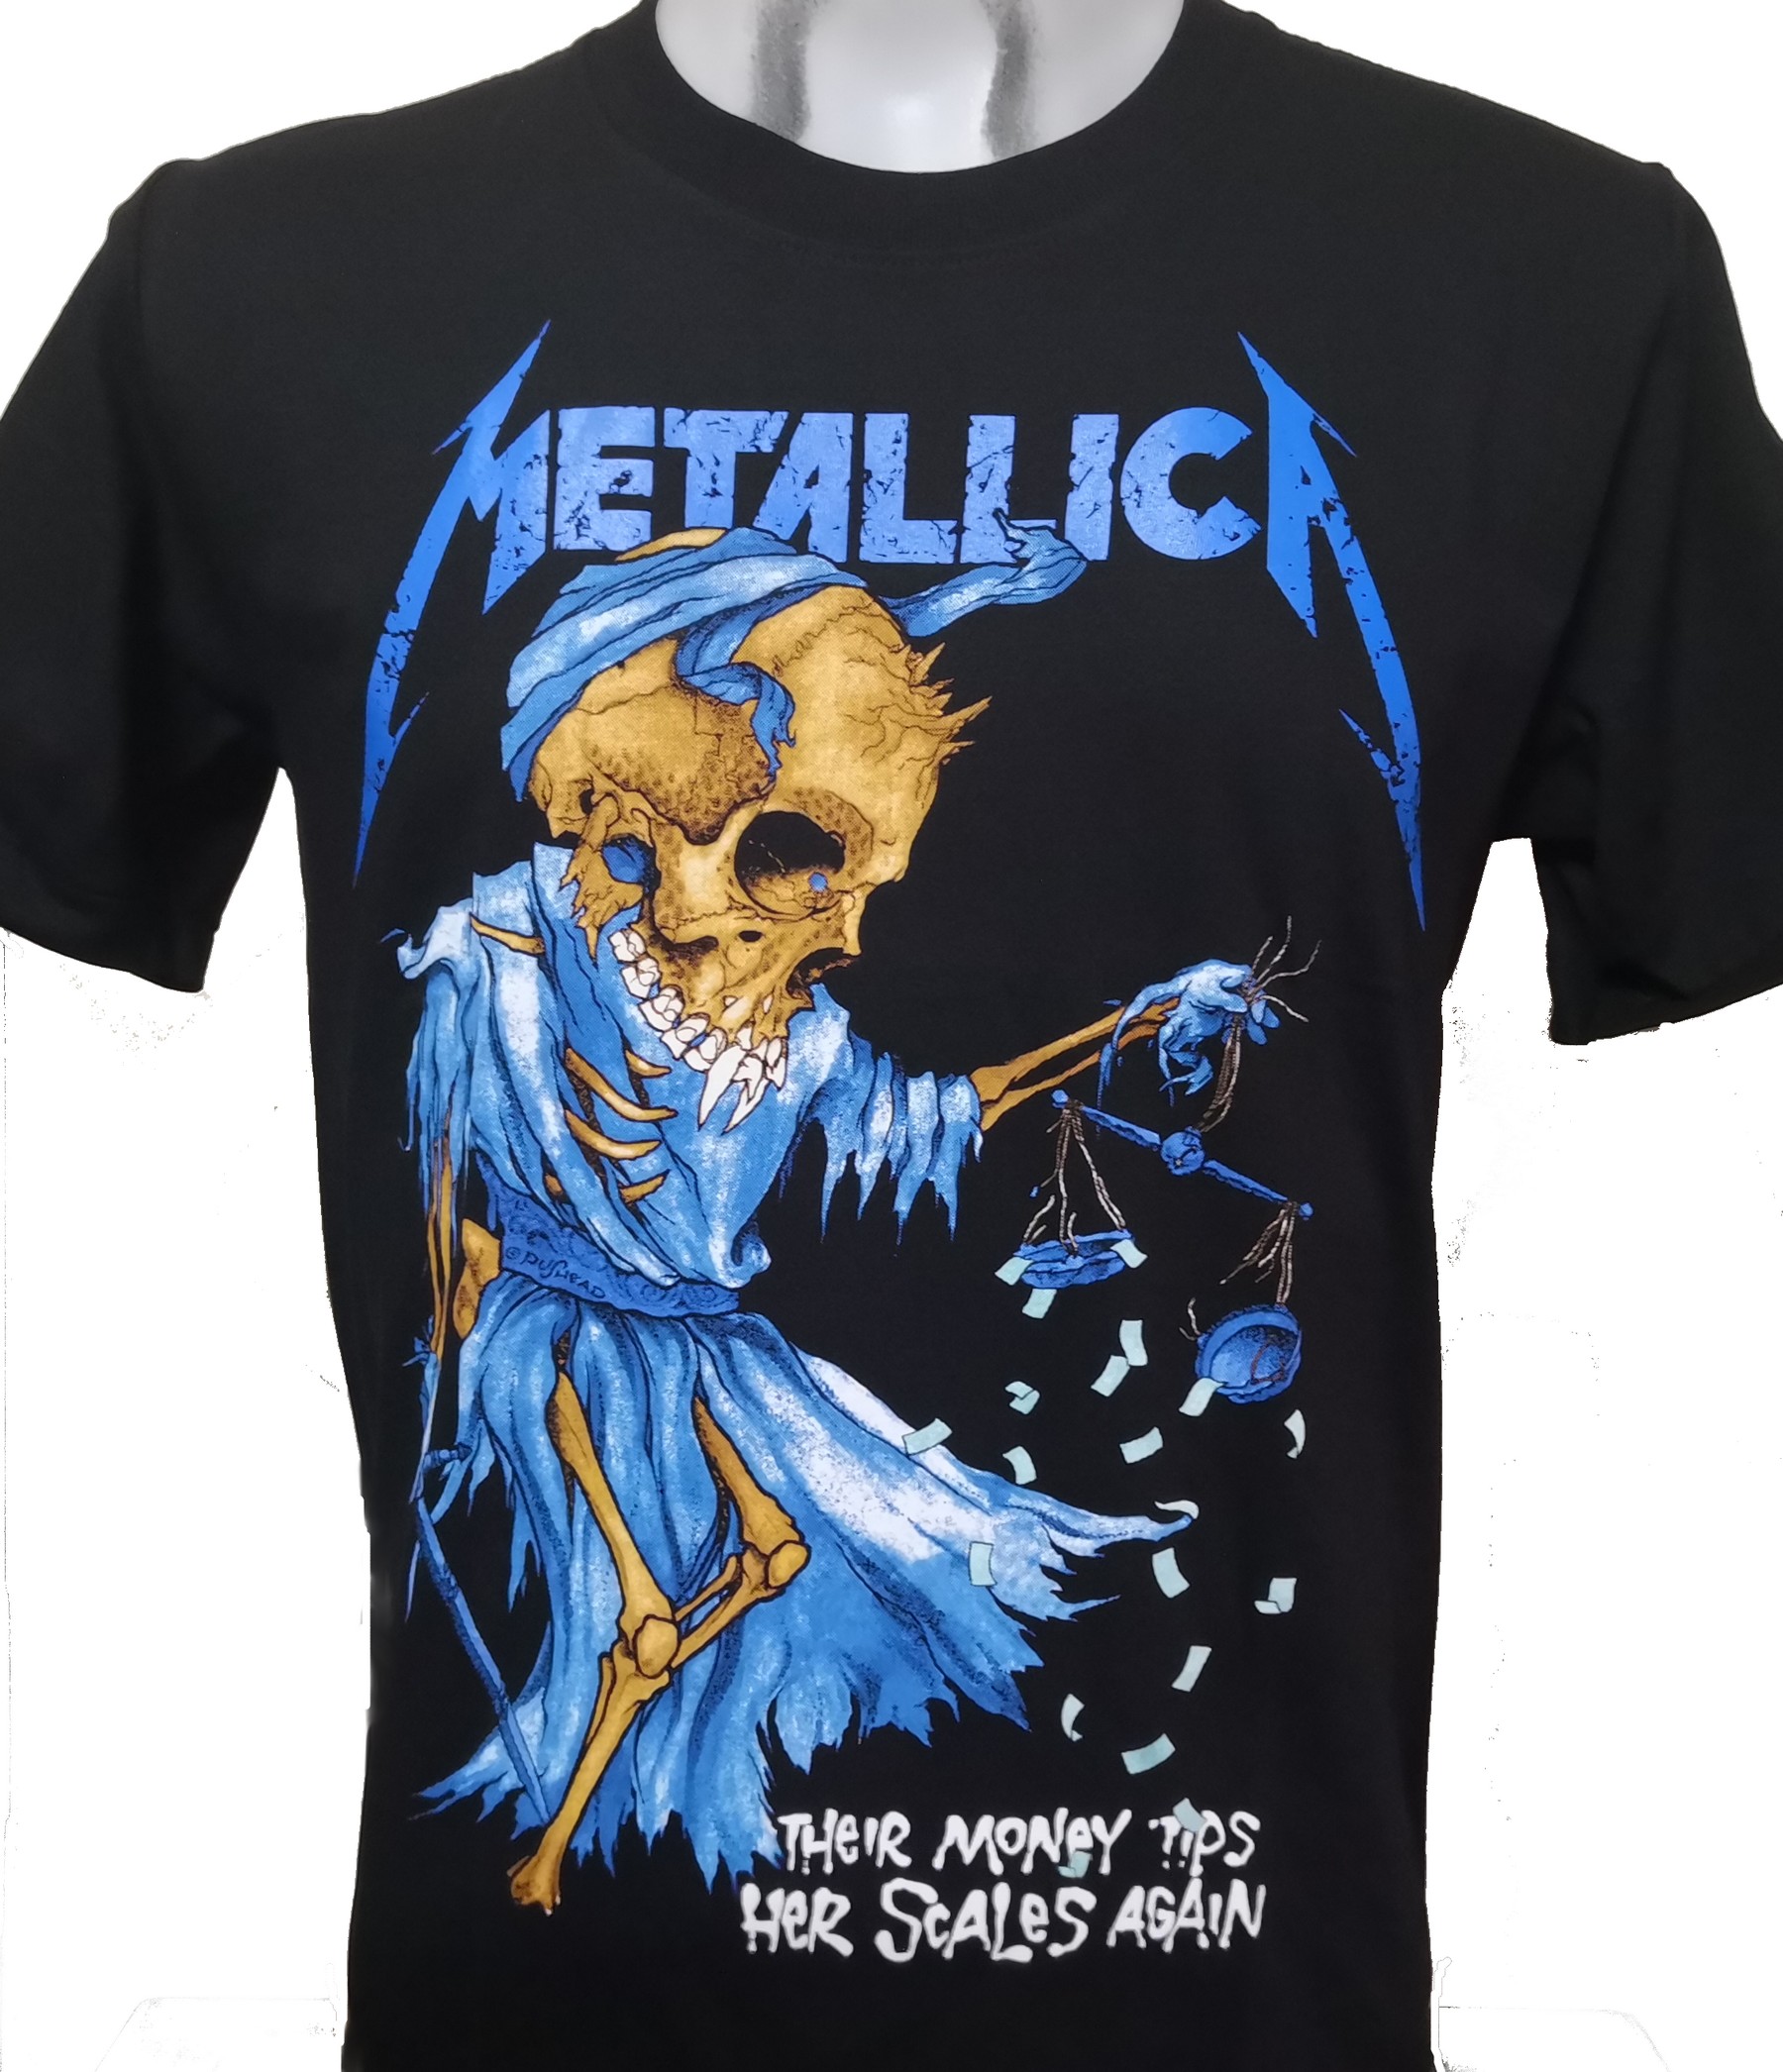 Metallica t-shirt size S – RoxxBKK